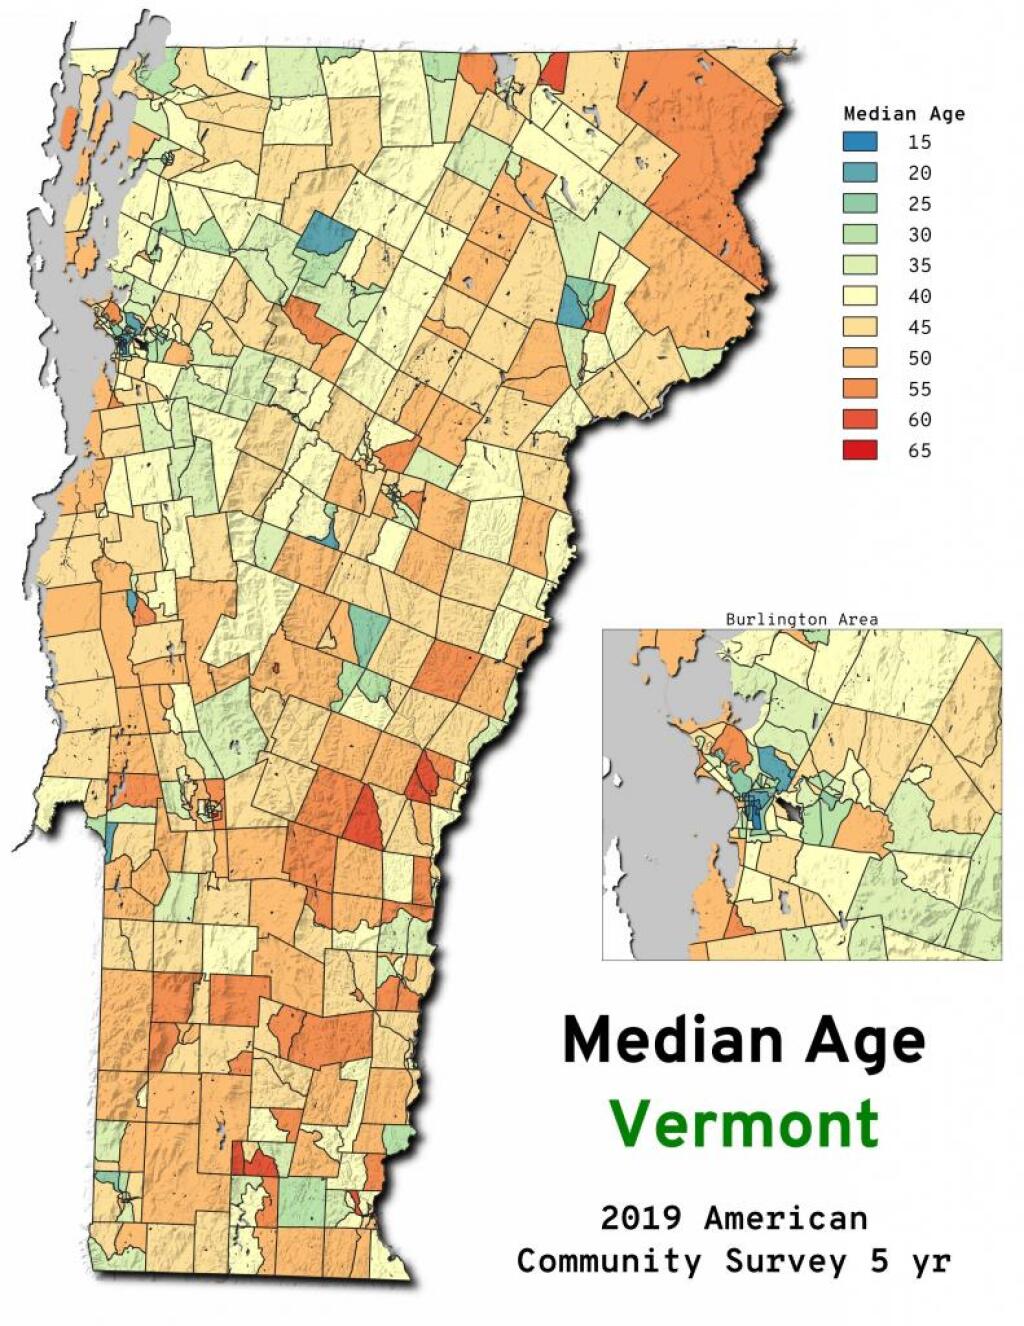 Median Age Vermont